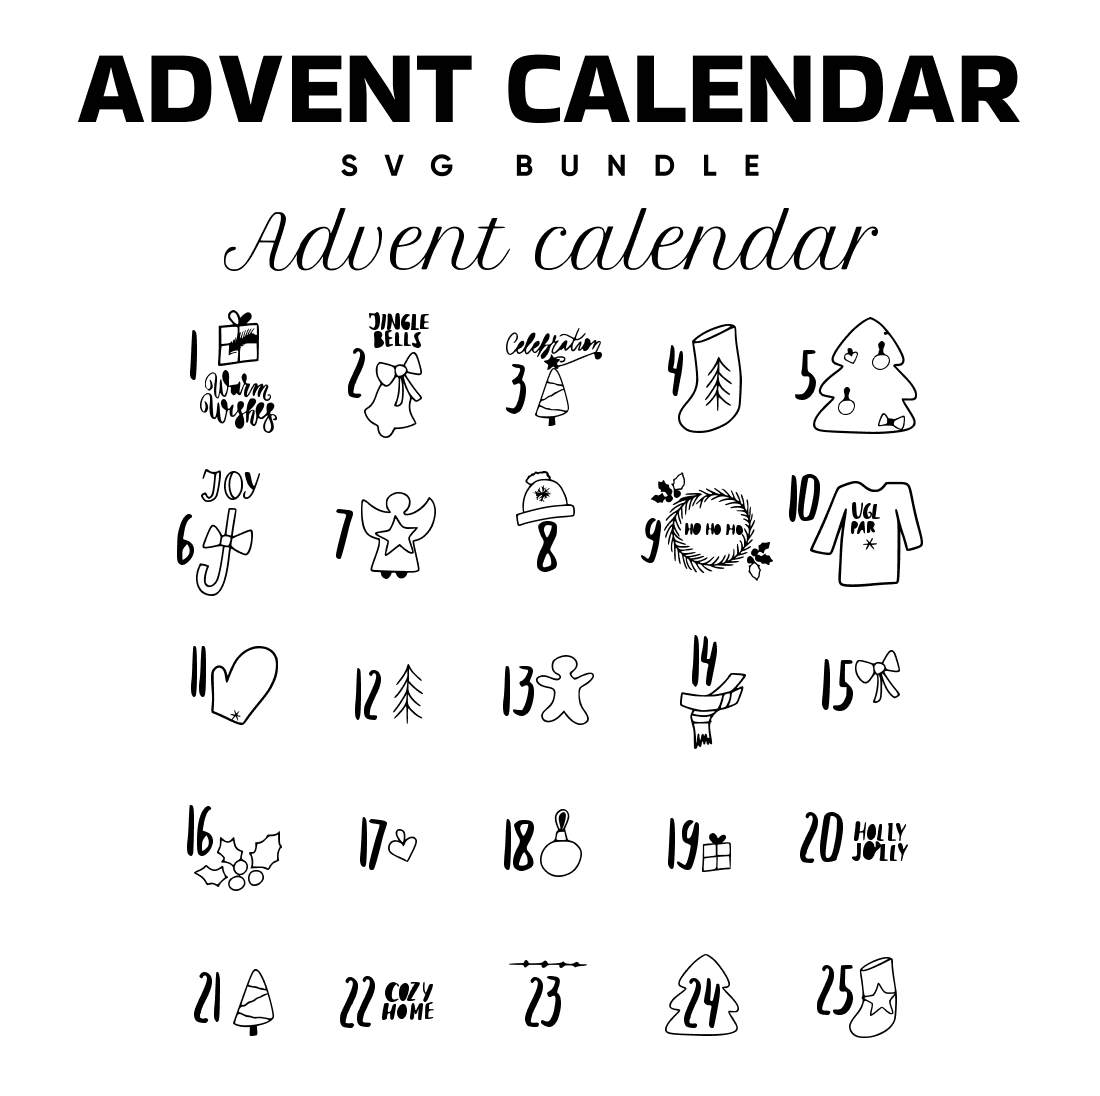 Advent Calendar SVG.